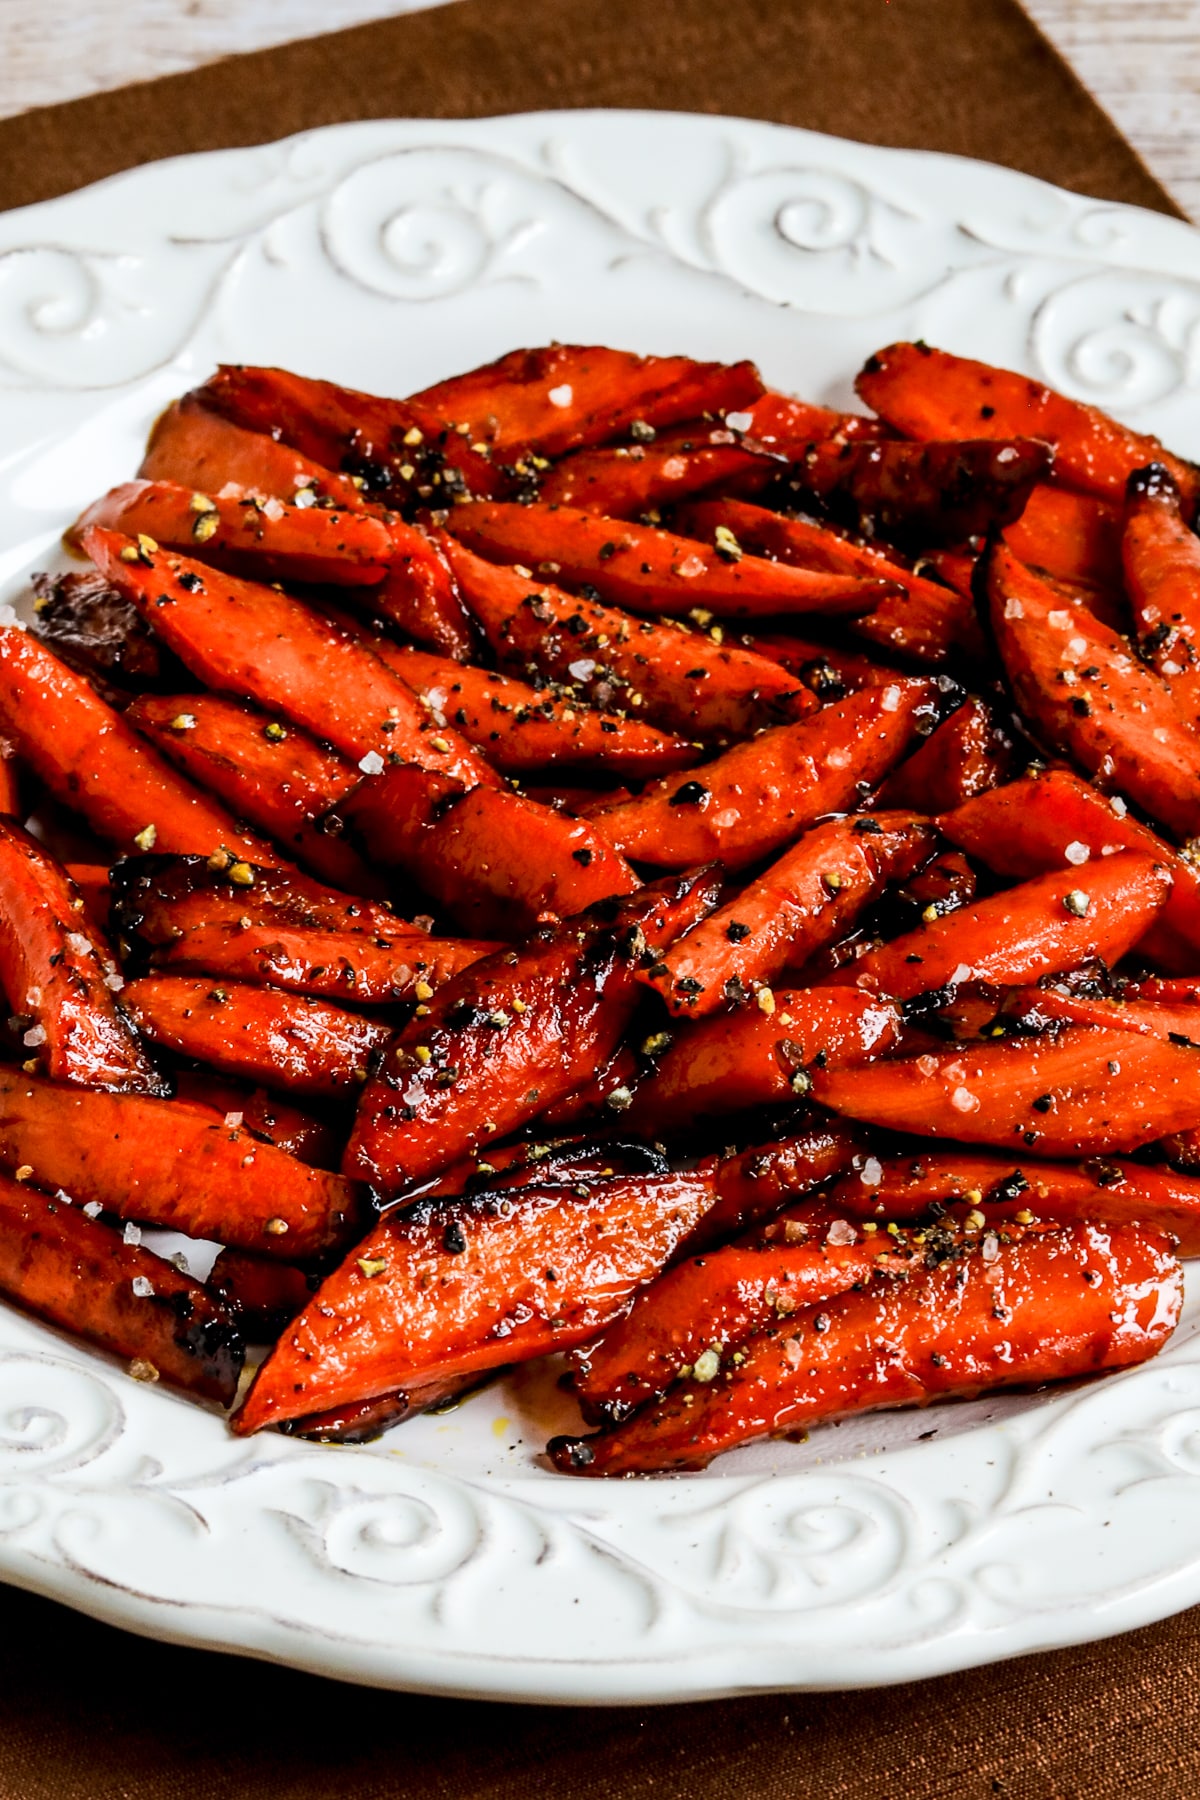 Maple Glazed Carrots shown on serving plate.